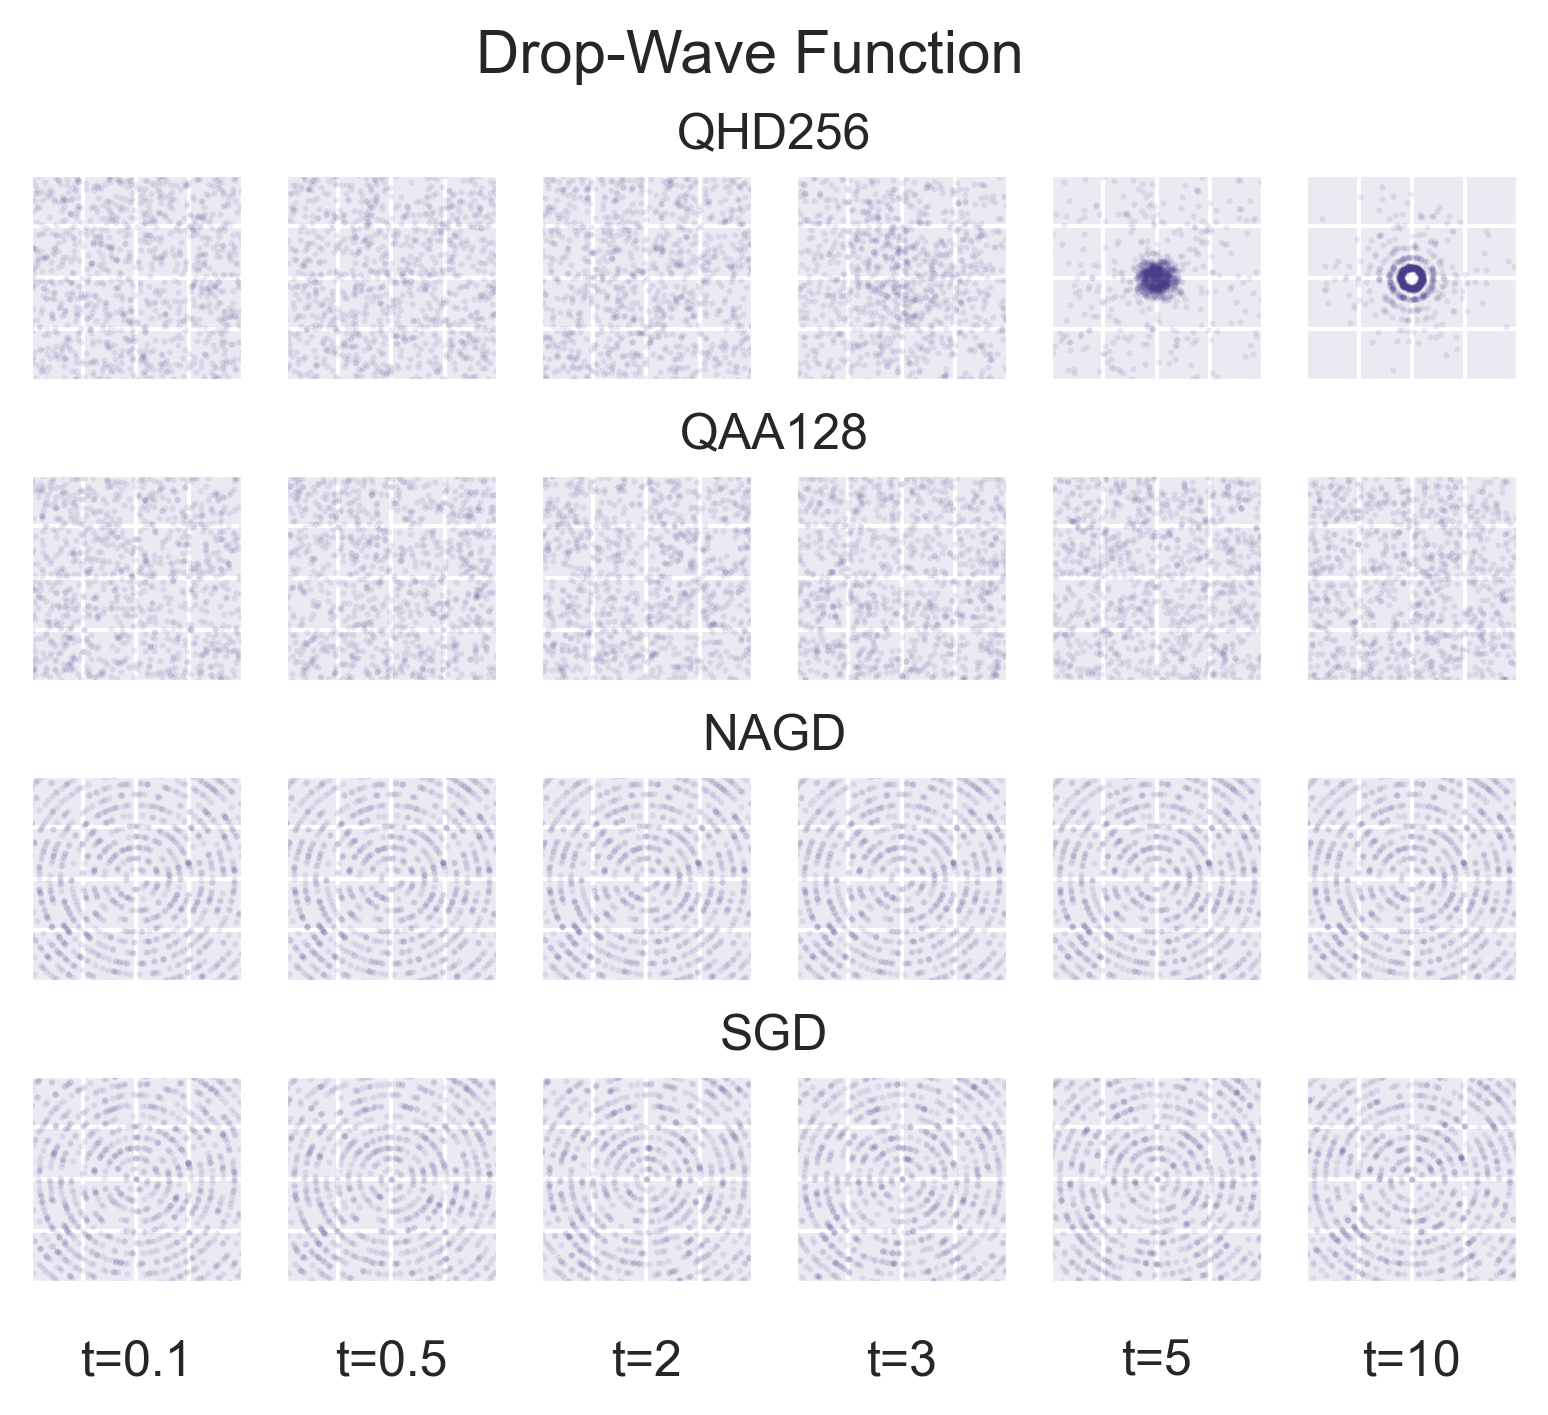 Comparison of optimization methods on dropwave